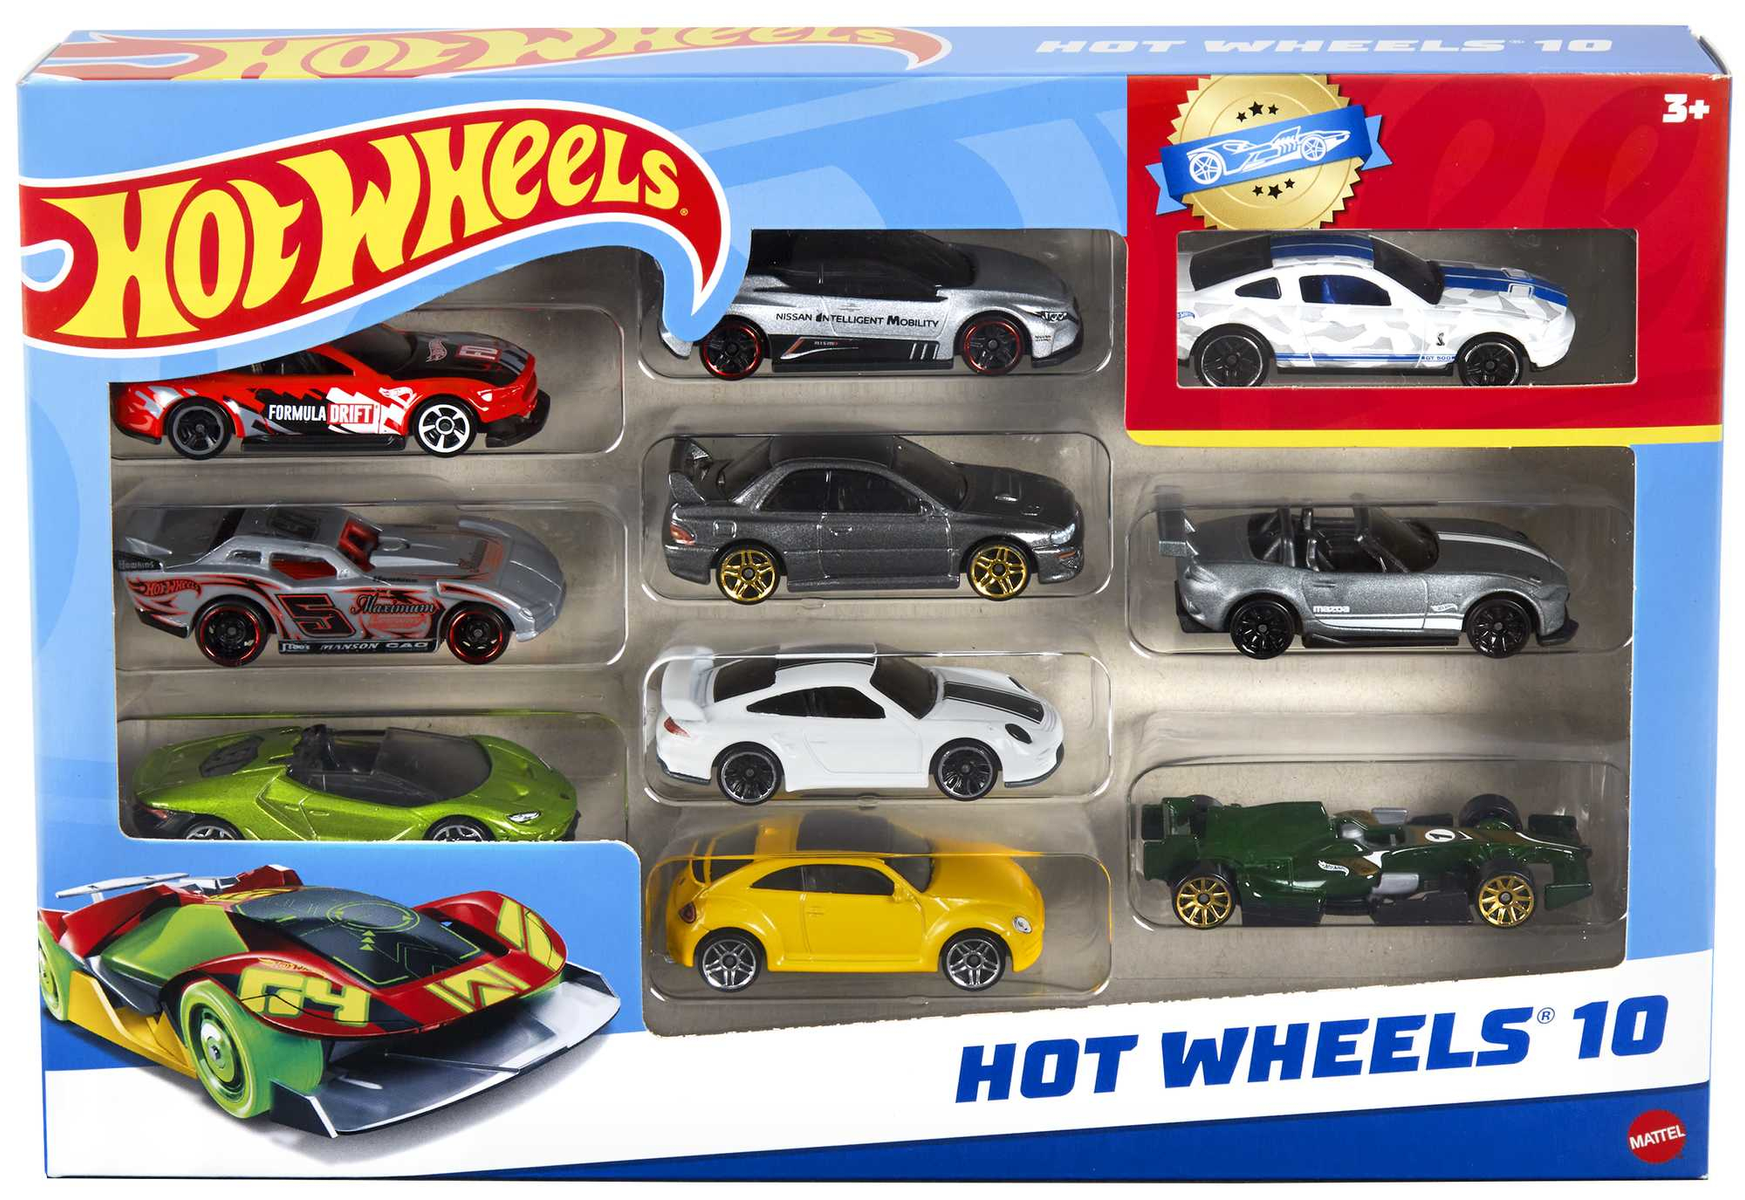 412496 HOT toy WHEELS vehicle